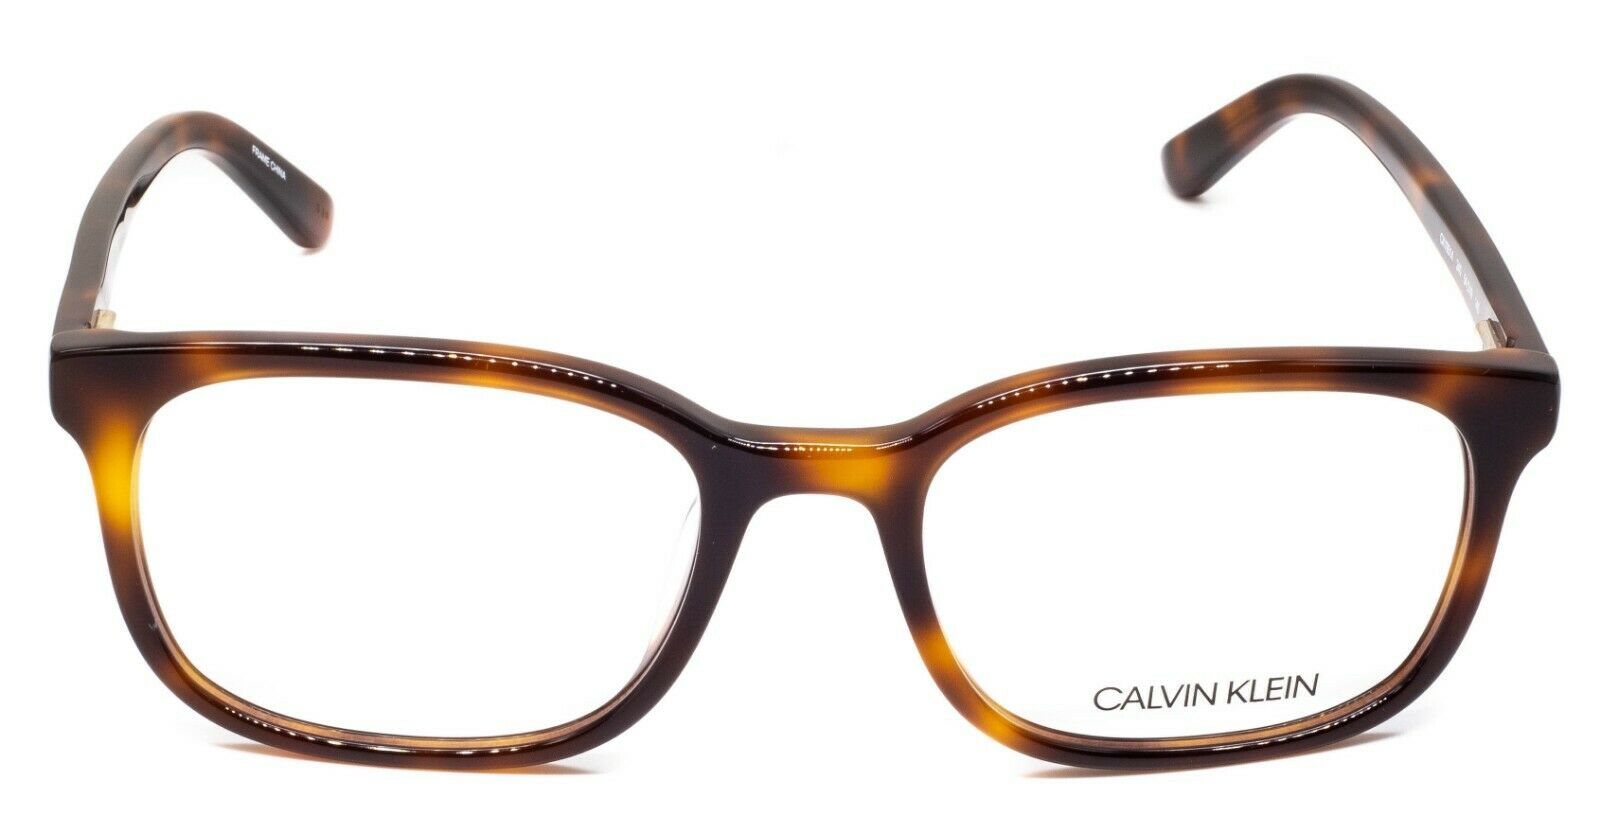 CALVIN KLEIN CK19514 240 54mm Eyewear RX Optical FRAMES Eyeglasses Glasses - New